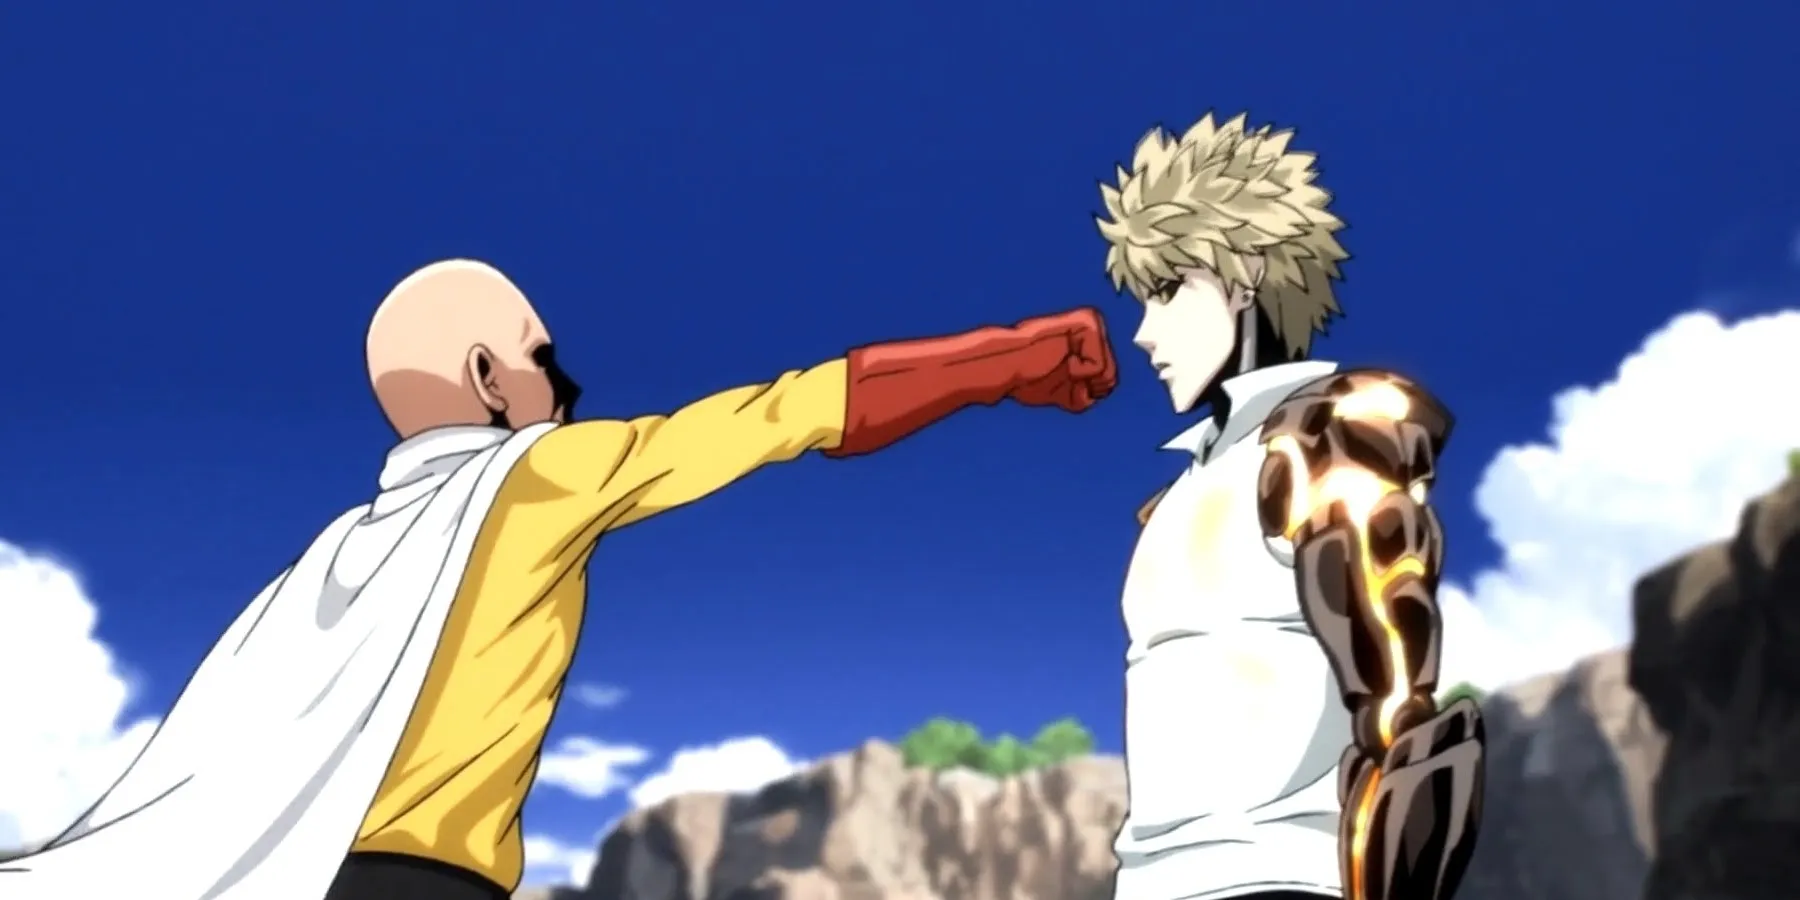 Genos et Saitama en train de se battre